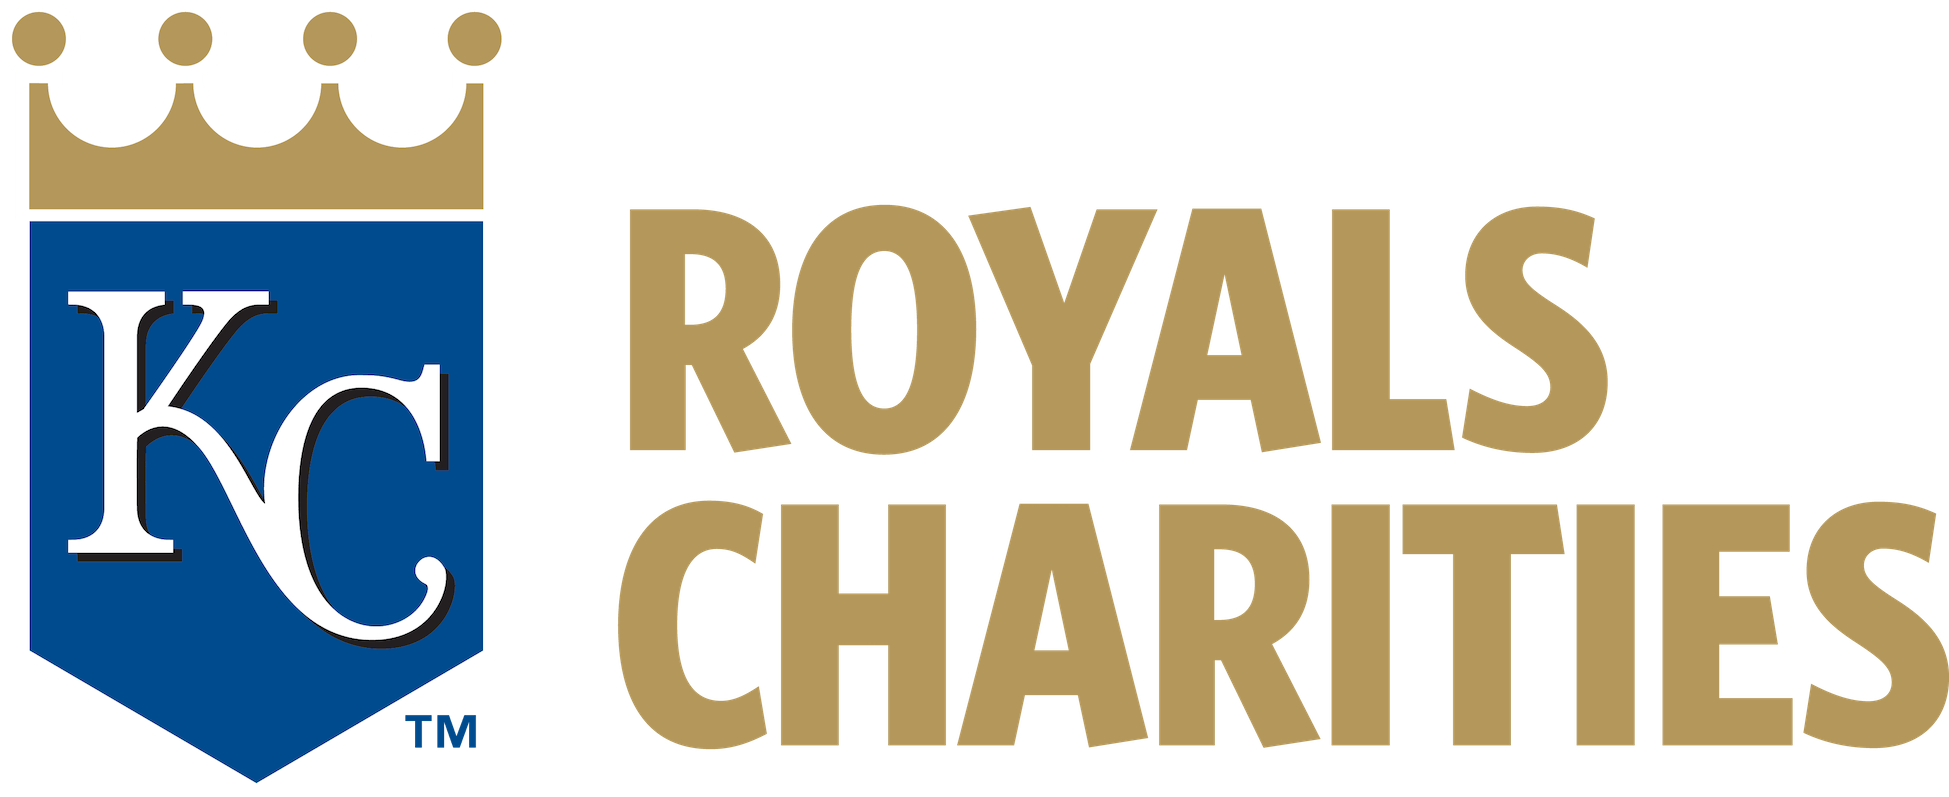 KC Royals Logo - Kansas city royals crown logo graphic royalty free stock - RR ...